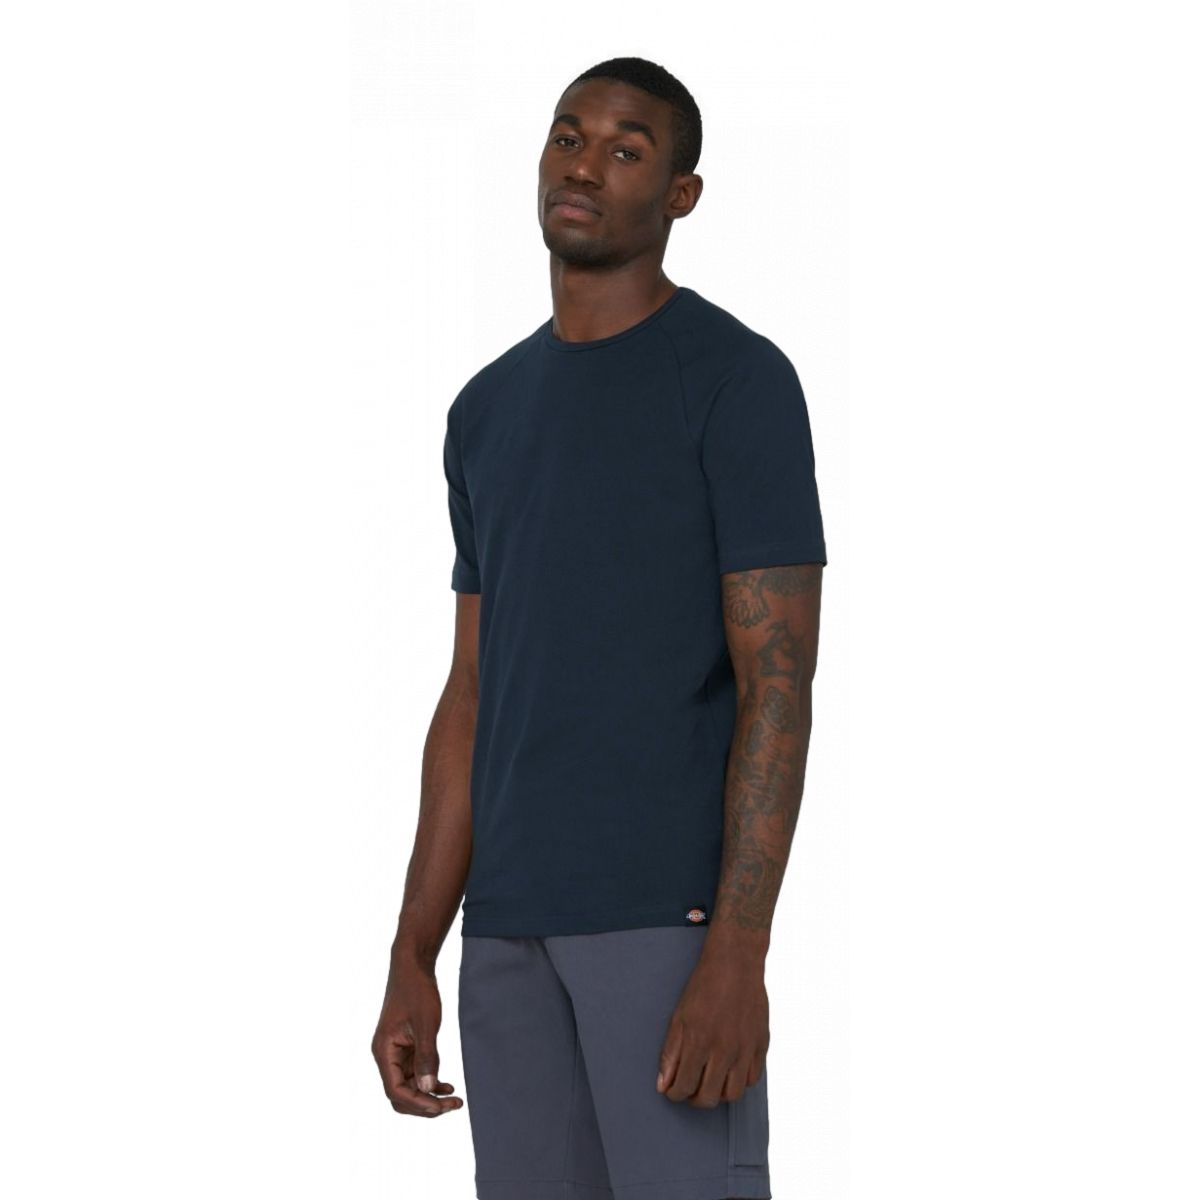 Tee-shirt Temp-IQ Bleu marine - Dickies - Taille 3XL 2